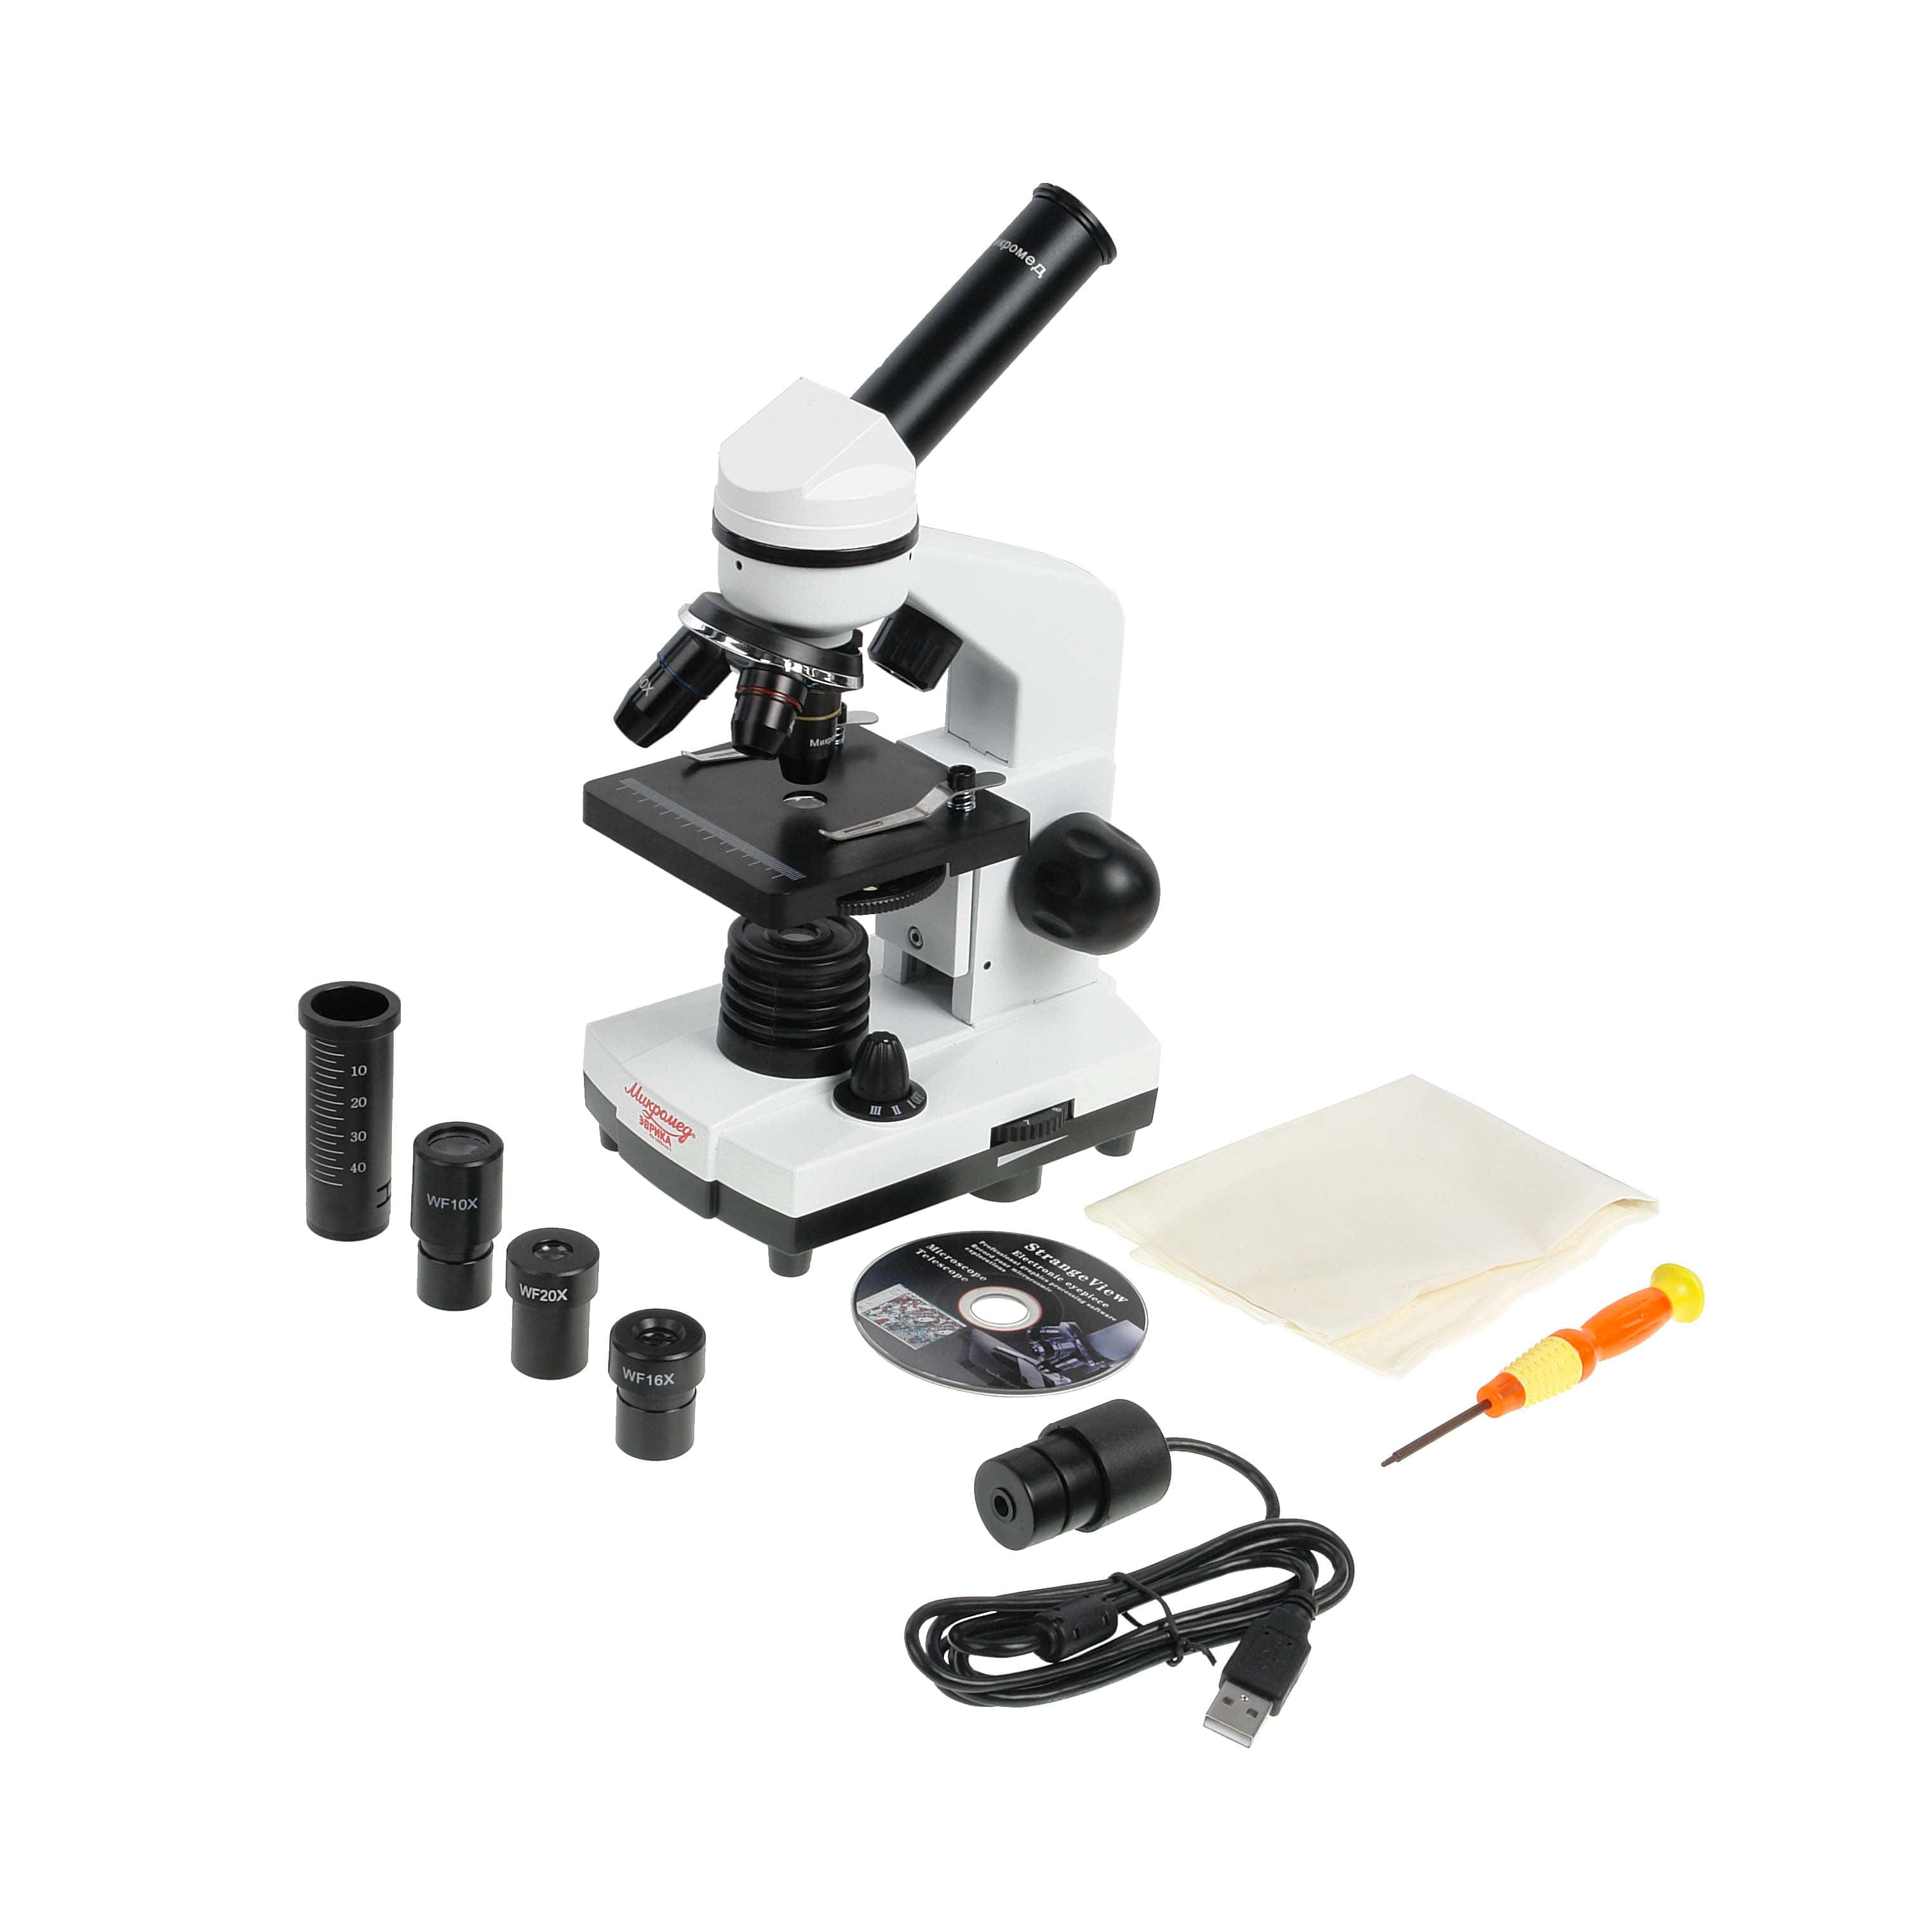 Микроскоп школьный Микромед Эврика 40x-1600x (вар. 2) с видеоокуляром